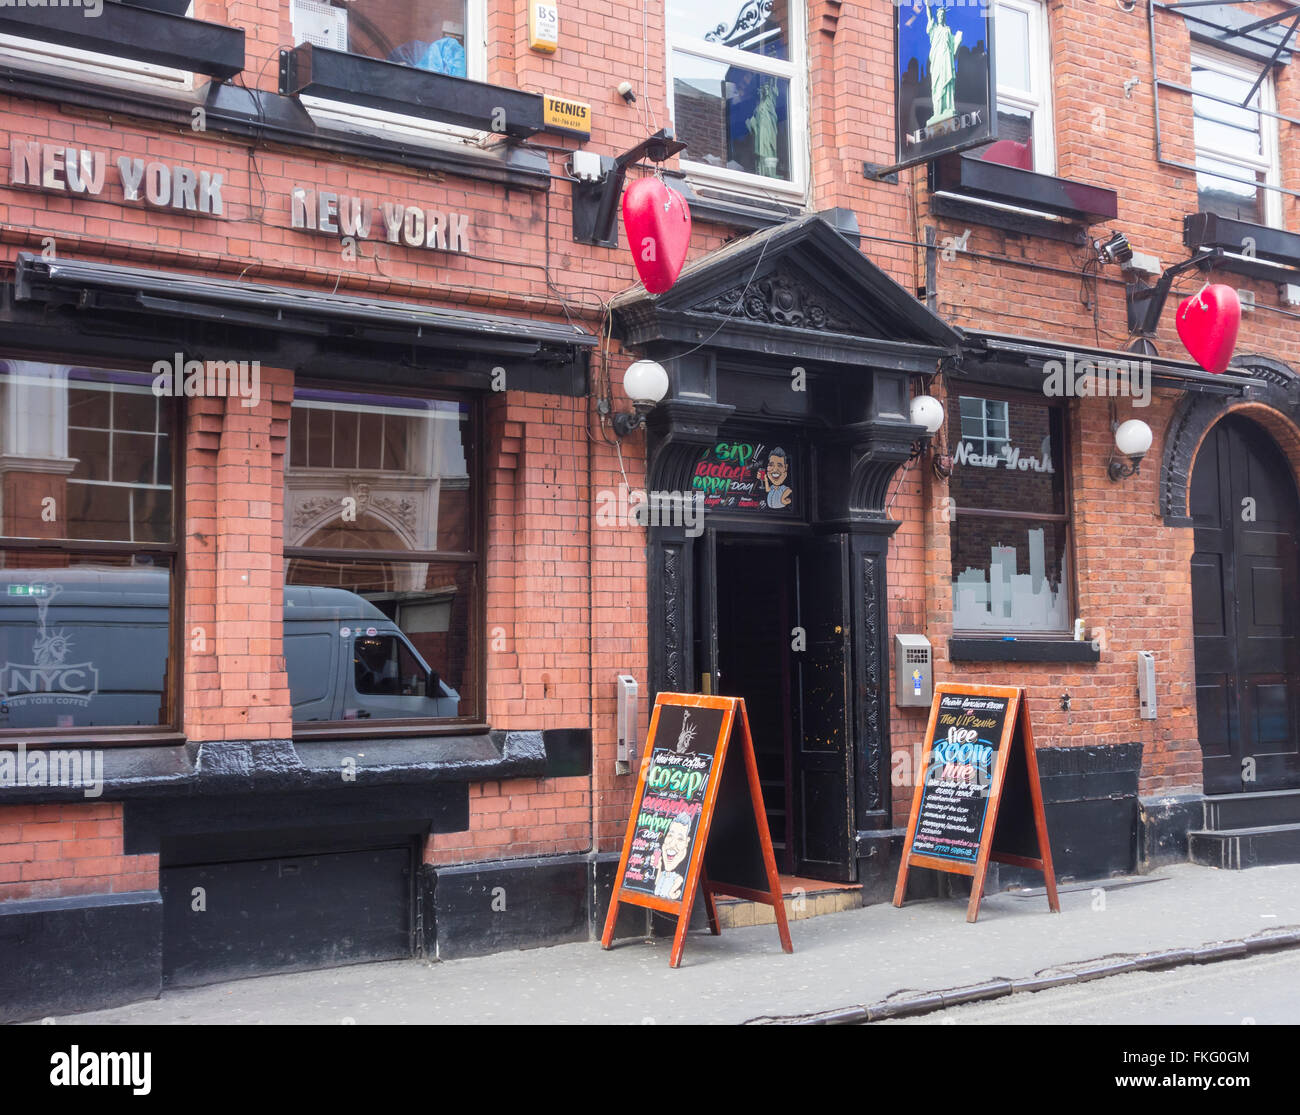 New York New York bar sur Bloom street dans le village gai de Manchester. Manchester, Angleterre. UK Banque D'Images